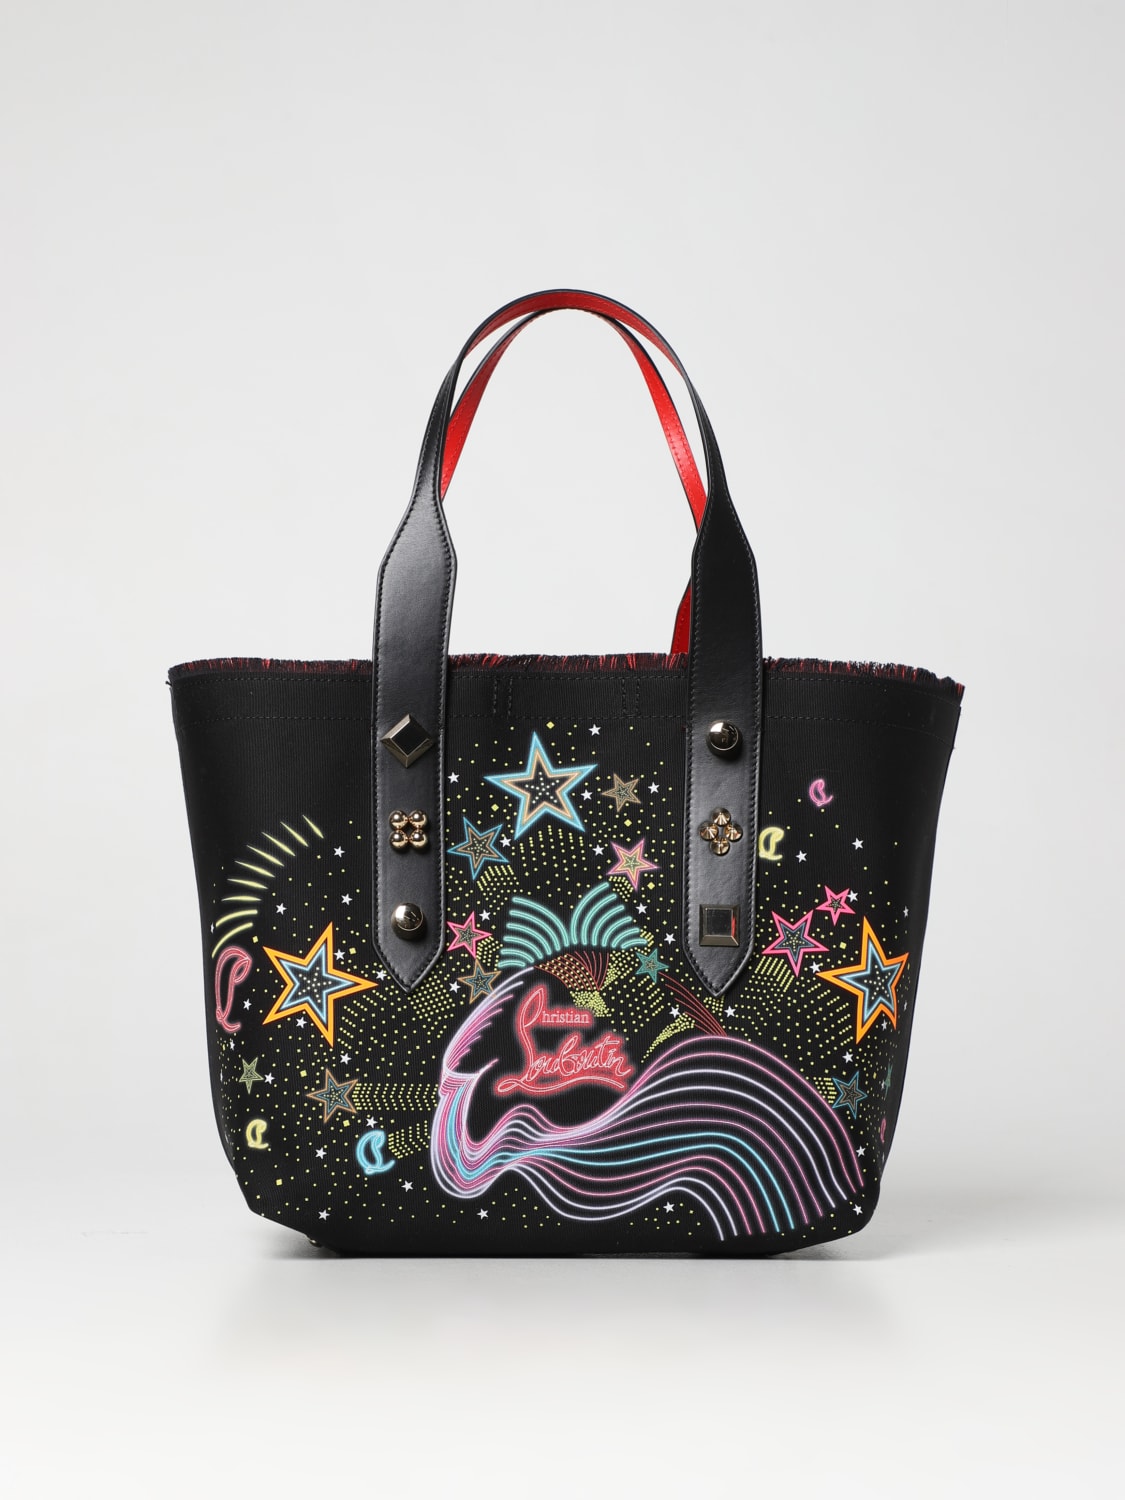 Luxury handbag - Frangibus bag Christian Louboutin in black fabric